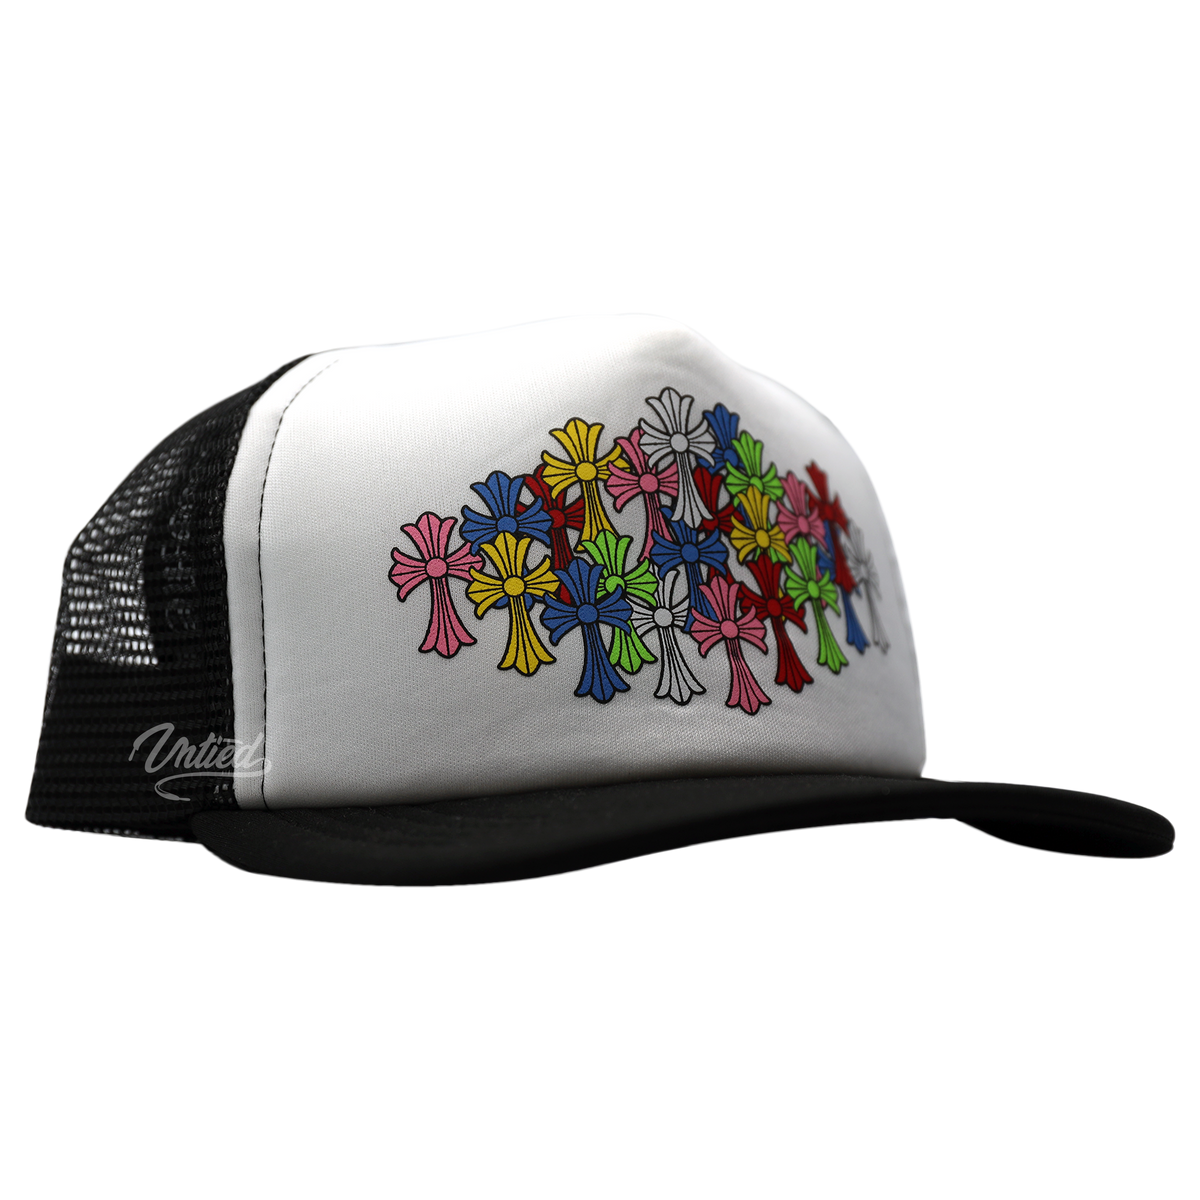 Chrome Hearts Trucker Hat "Black/White Multicolor Cross"